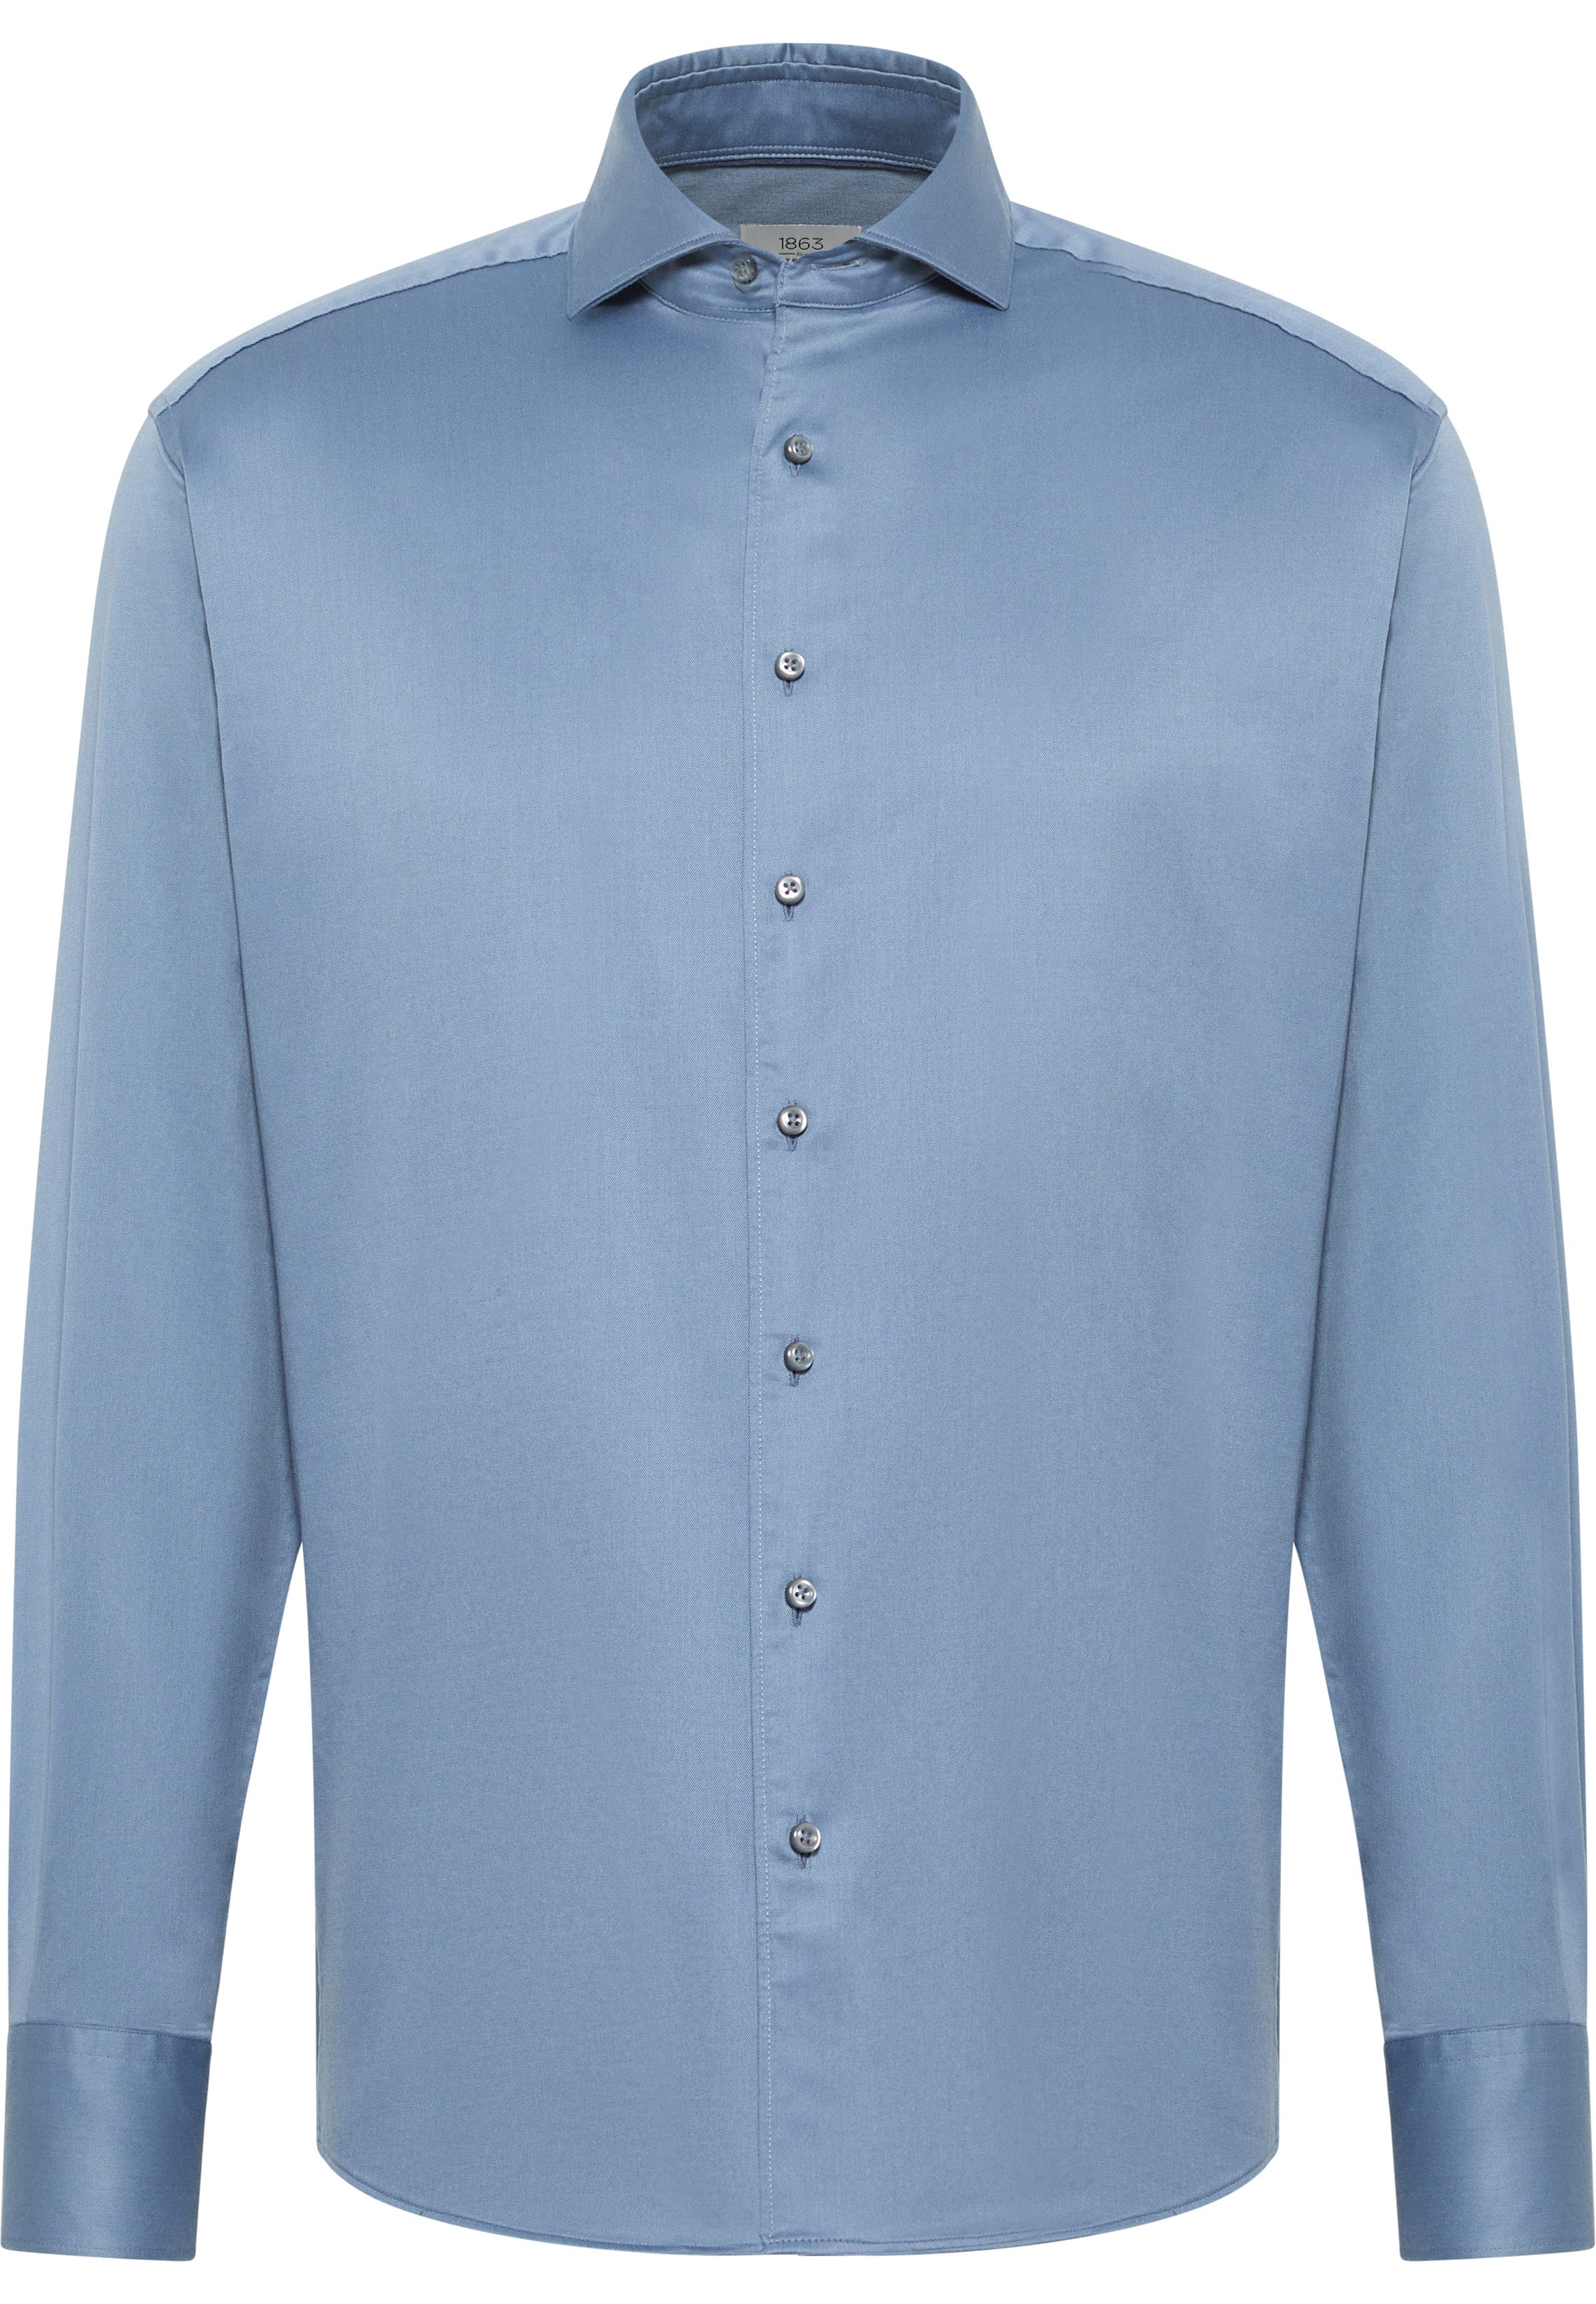 MODERN FIT Soft Luxury Shirt in sky blue plain